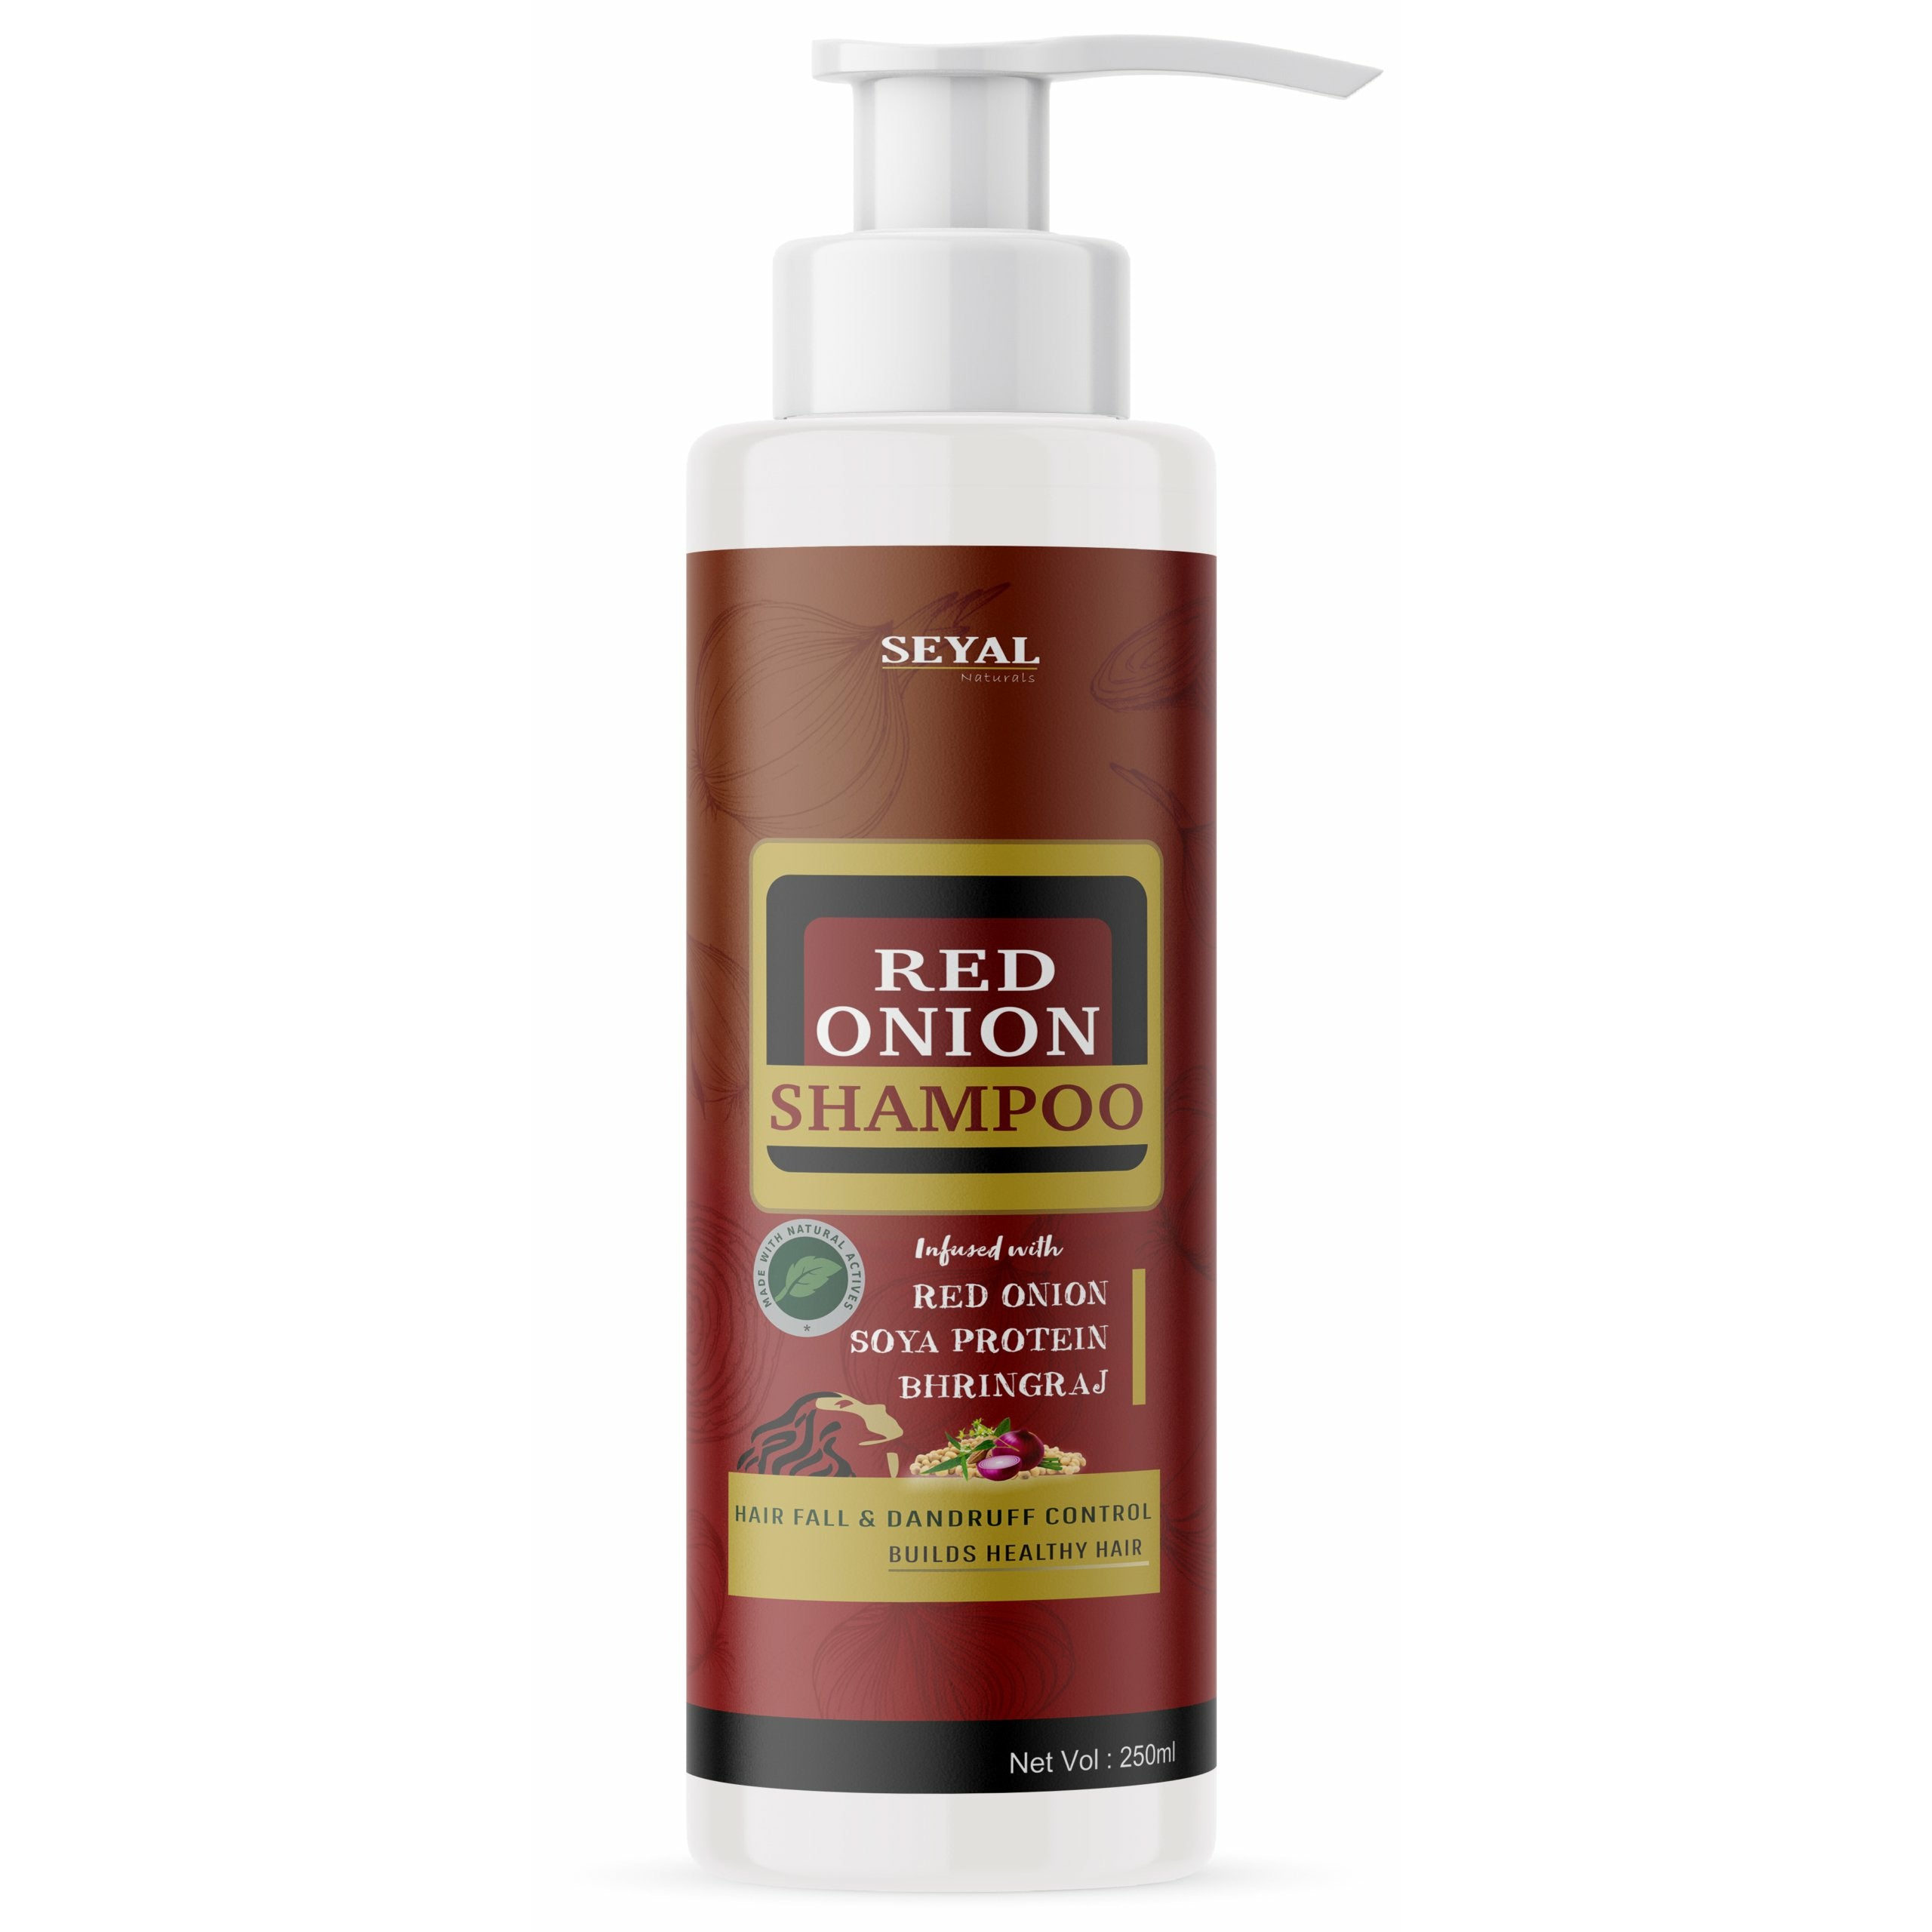 Seyal Red Onion Shampoo Soy Protein & Bhringraj - Hair Growth & Hair Fall Control - 250ml